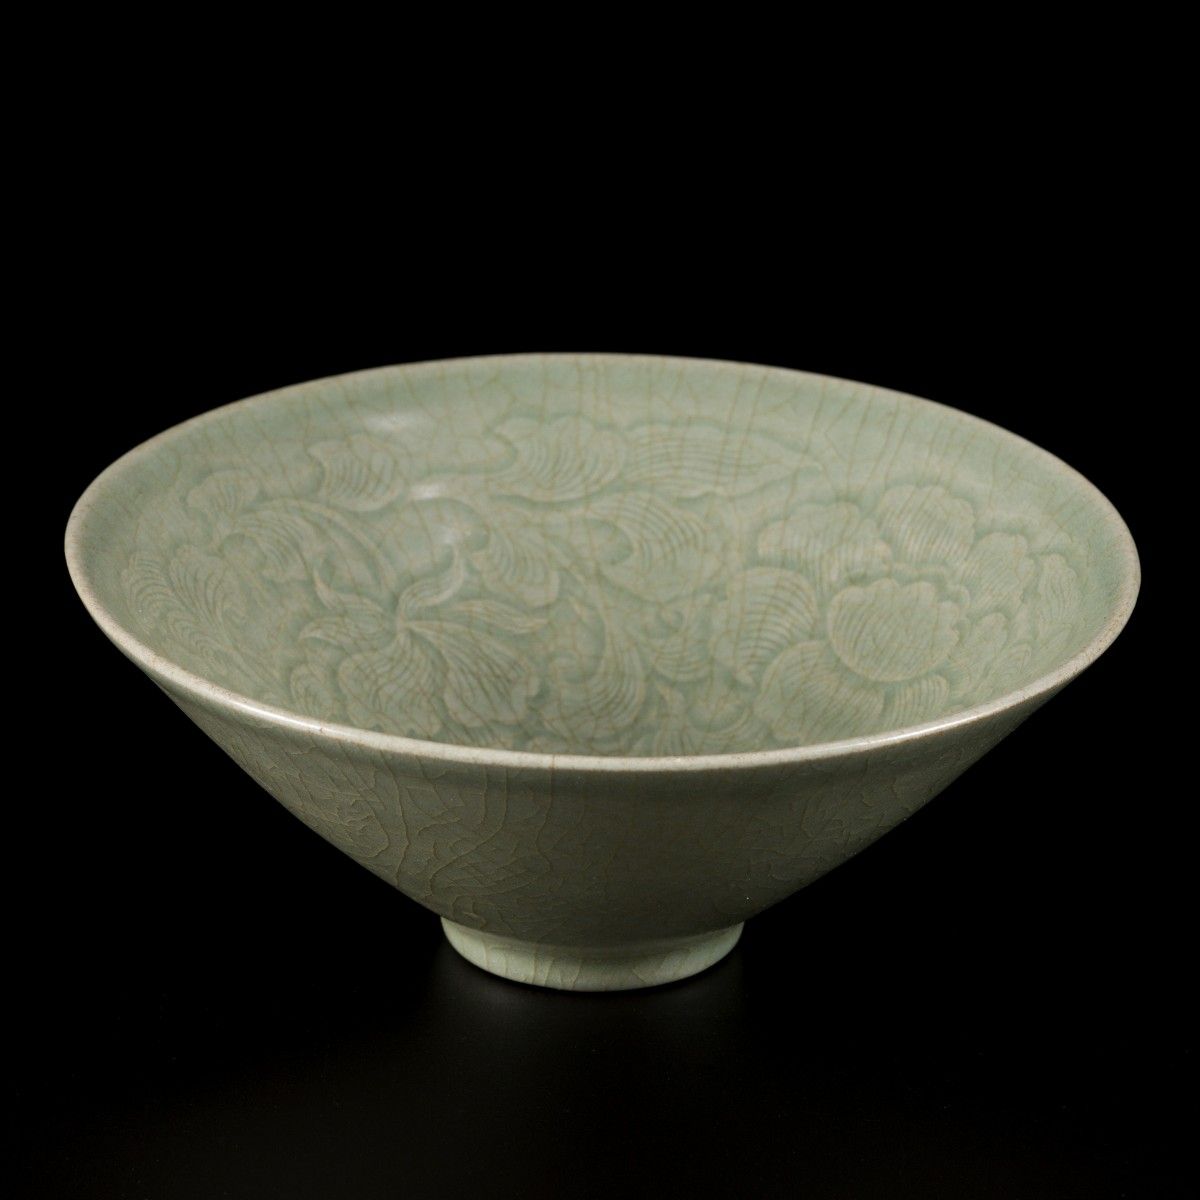 A celadon bowl, Korea, 15 century. Dim. 6 x 16 cm. Estimation : 1500 € - 2500 €.